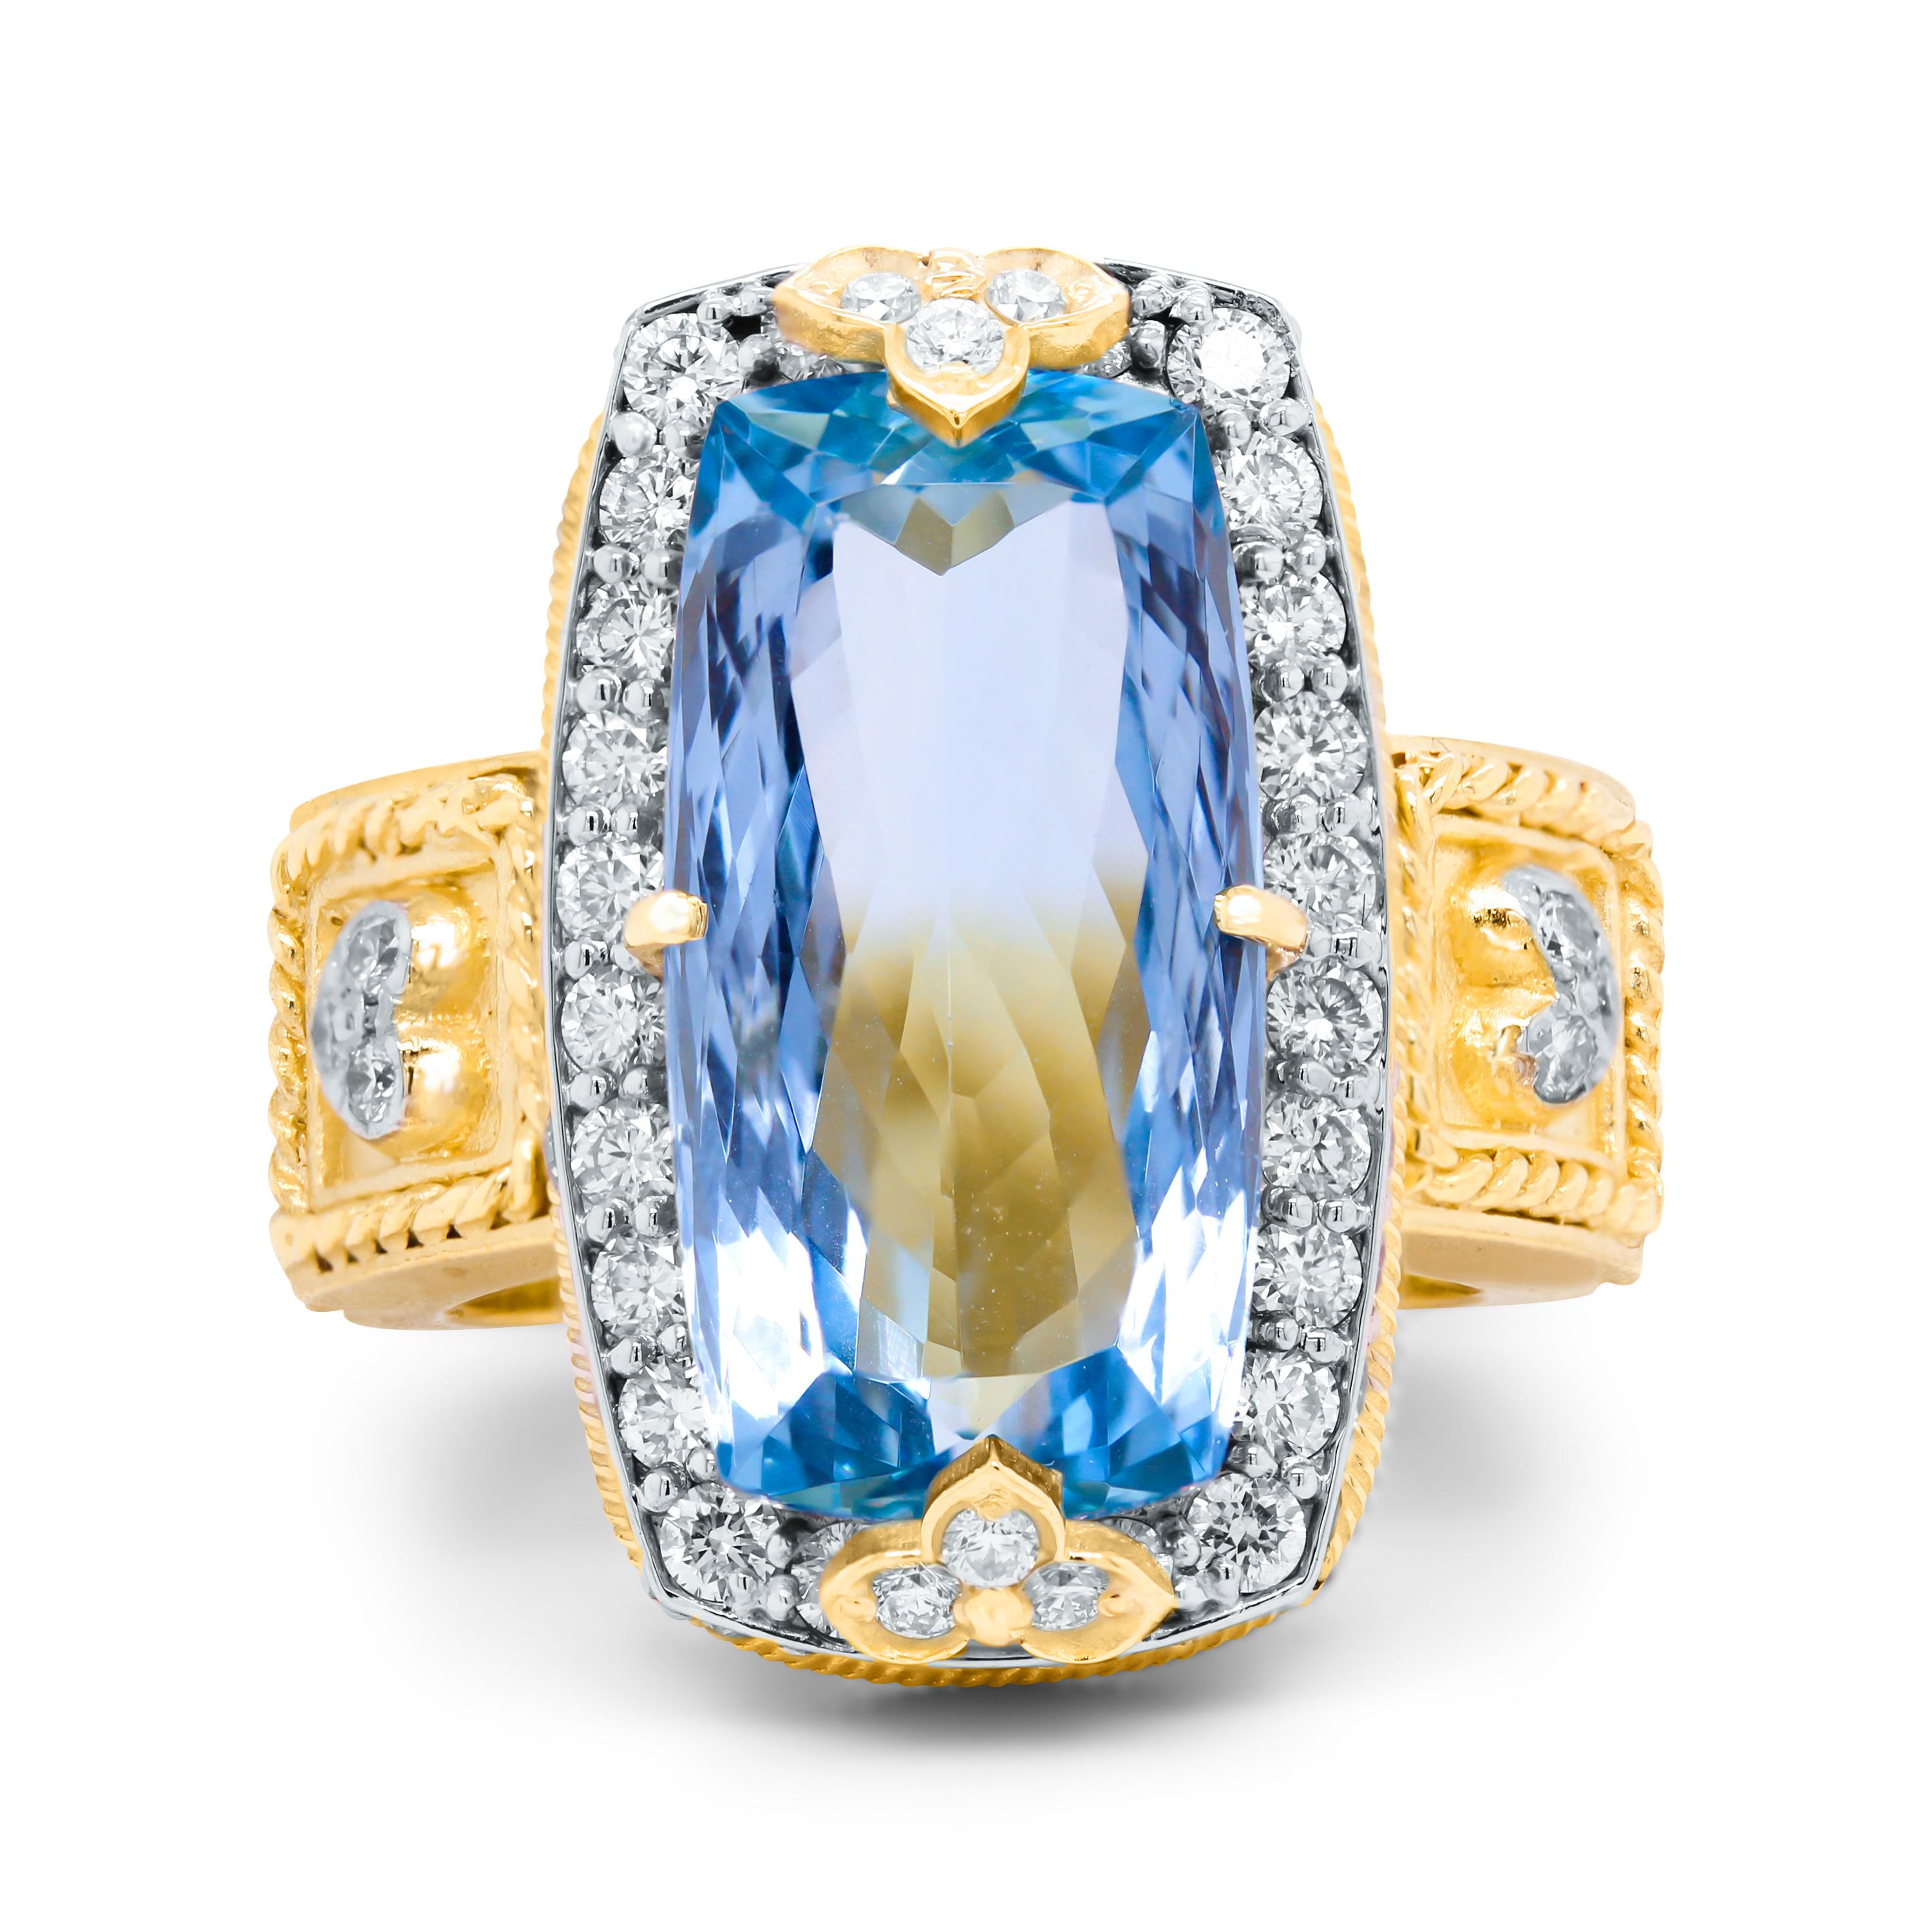 Women's Stambolian 18K Gold Diamond 8.42 Carat Emerald Cut Aquamarine Center Ring For Sale